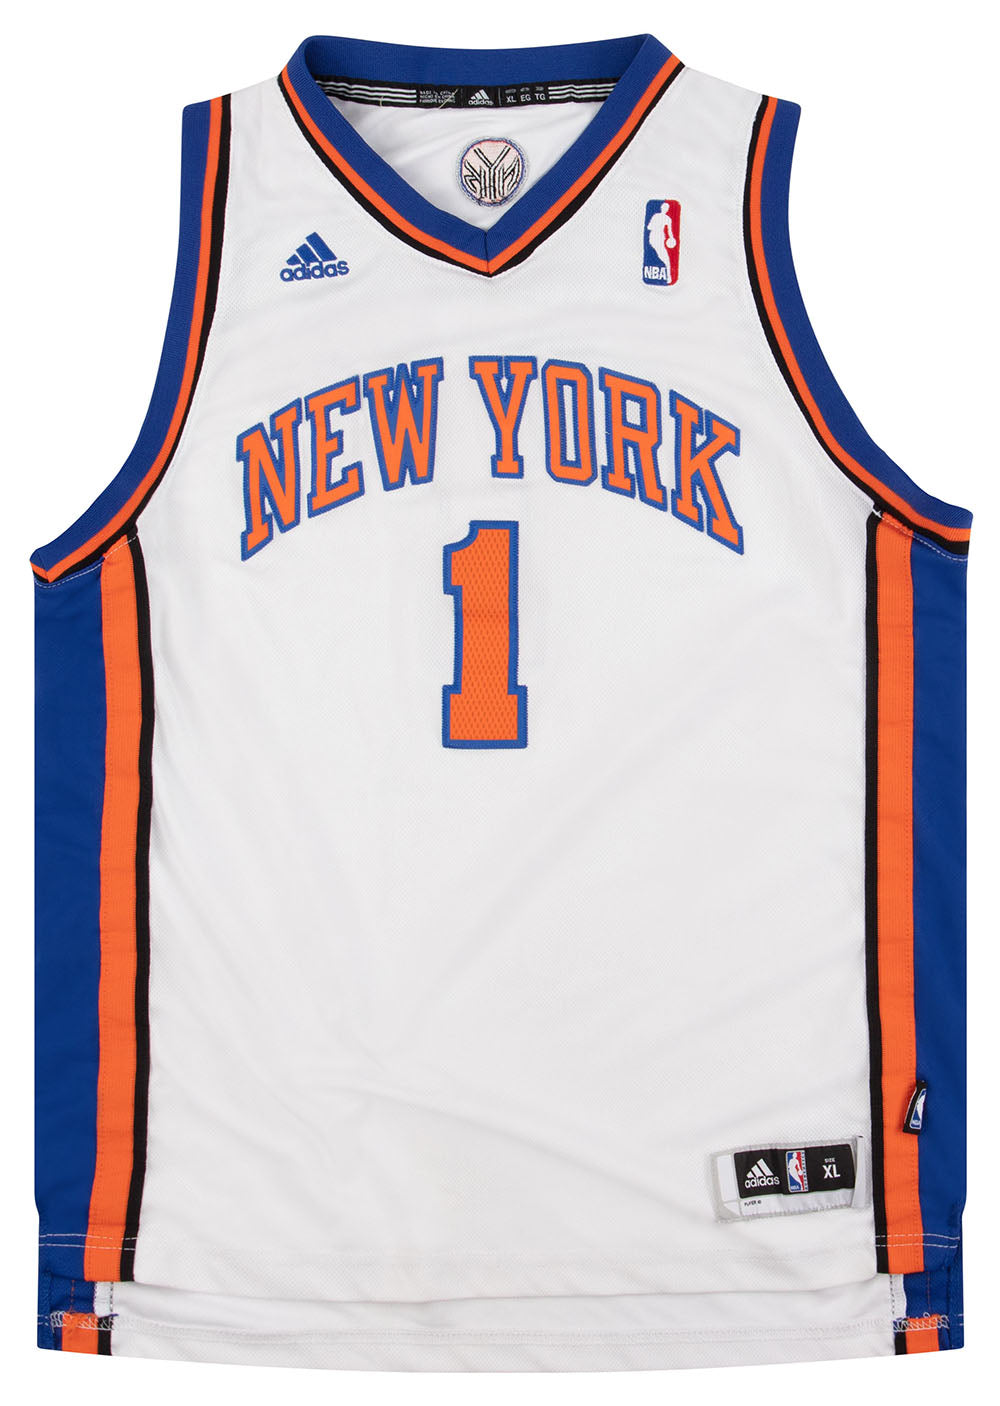 Knicks add Squarespace as team's first jersey sponsor - Newsday